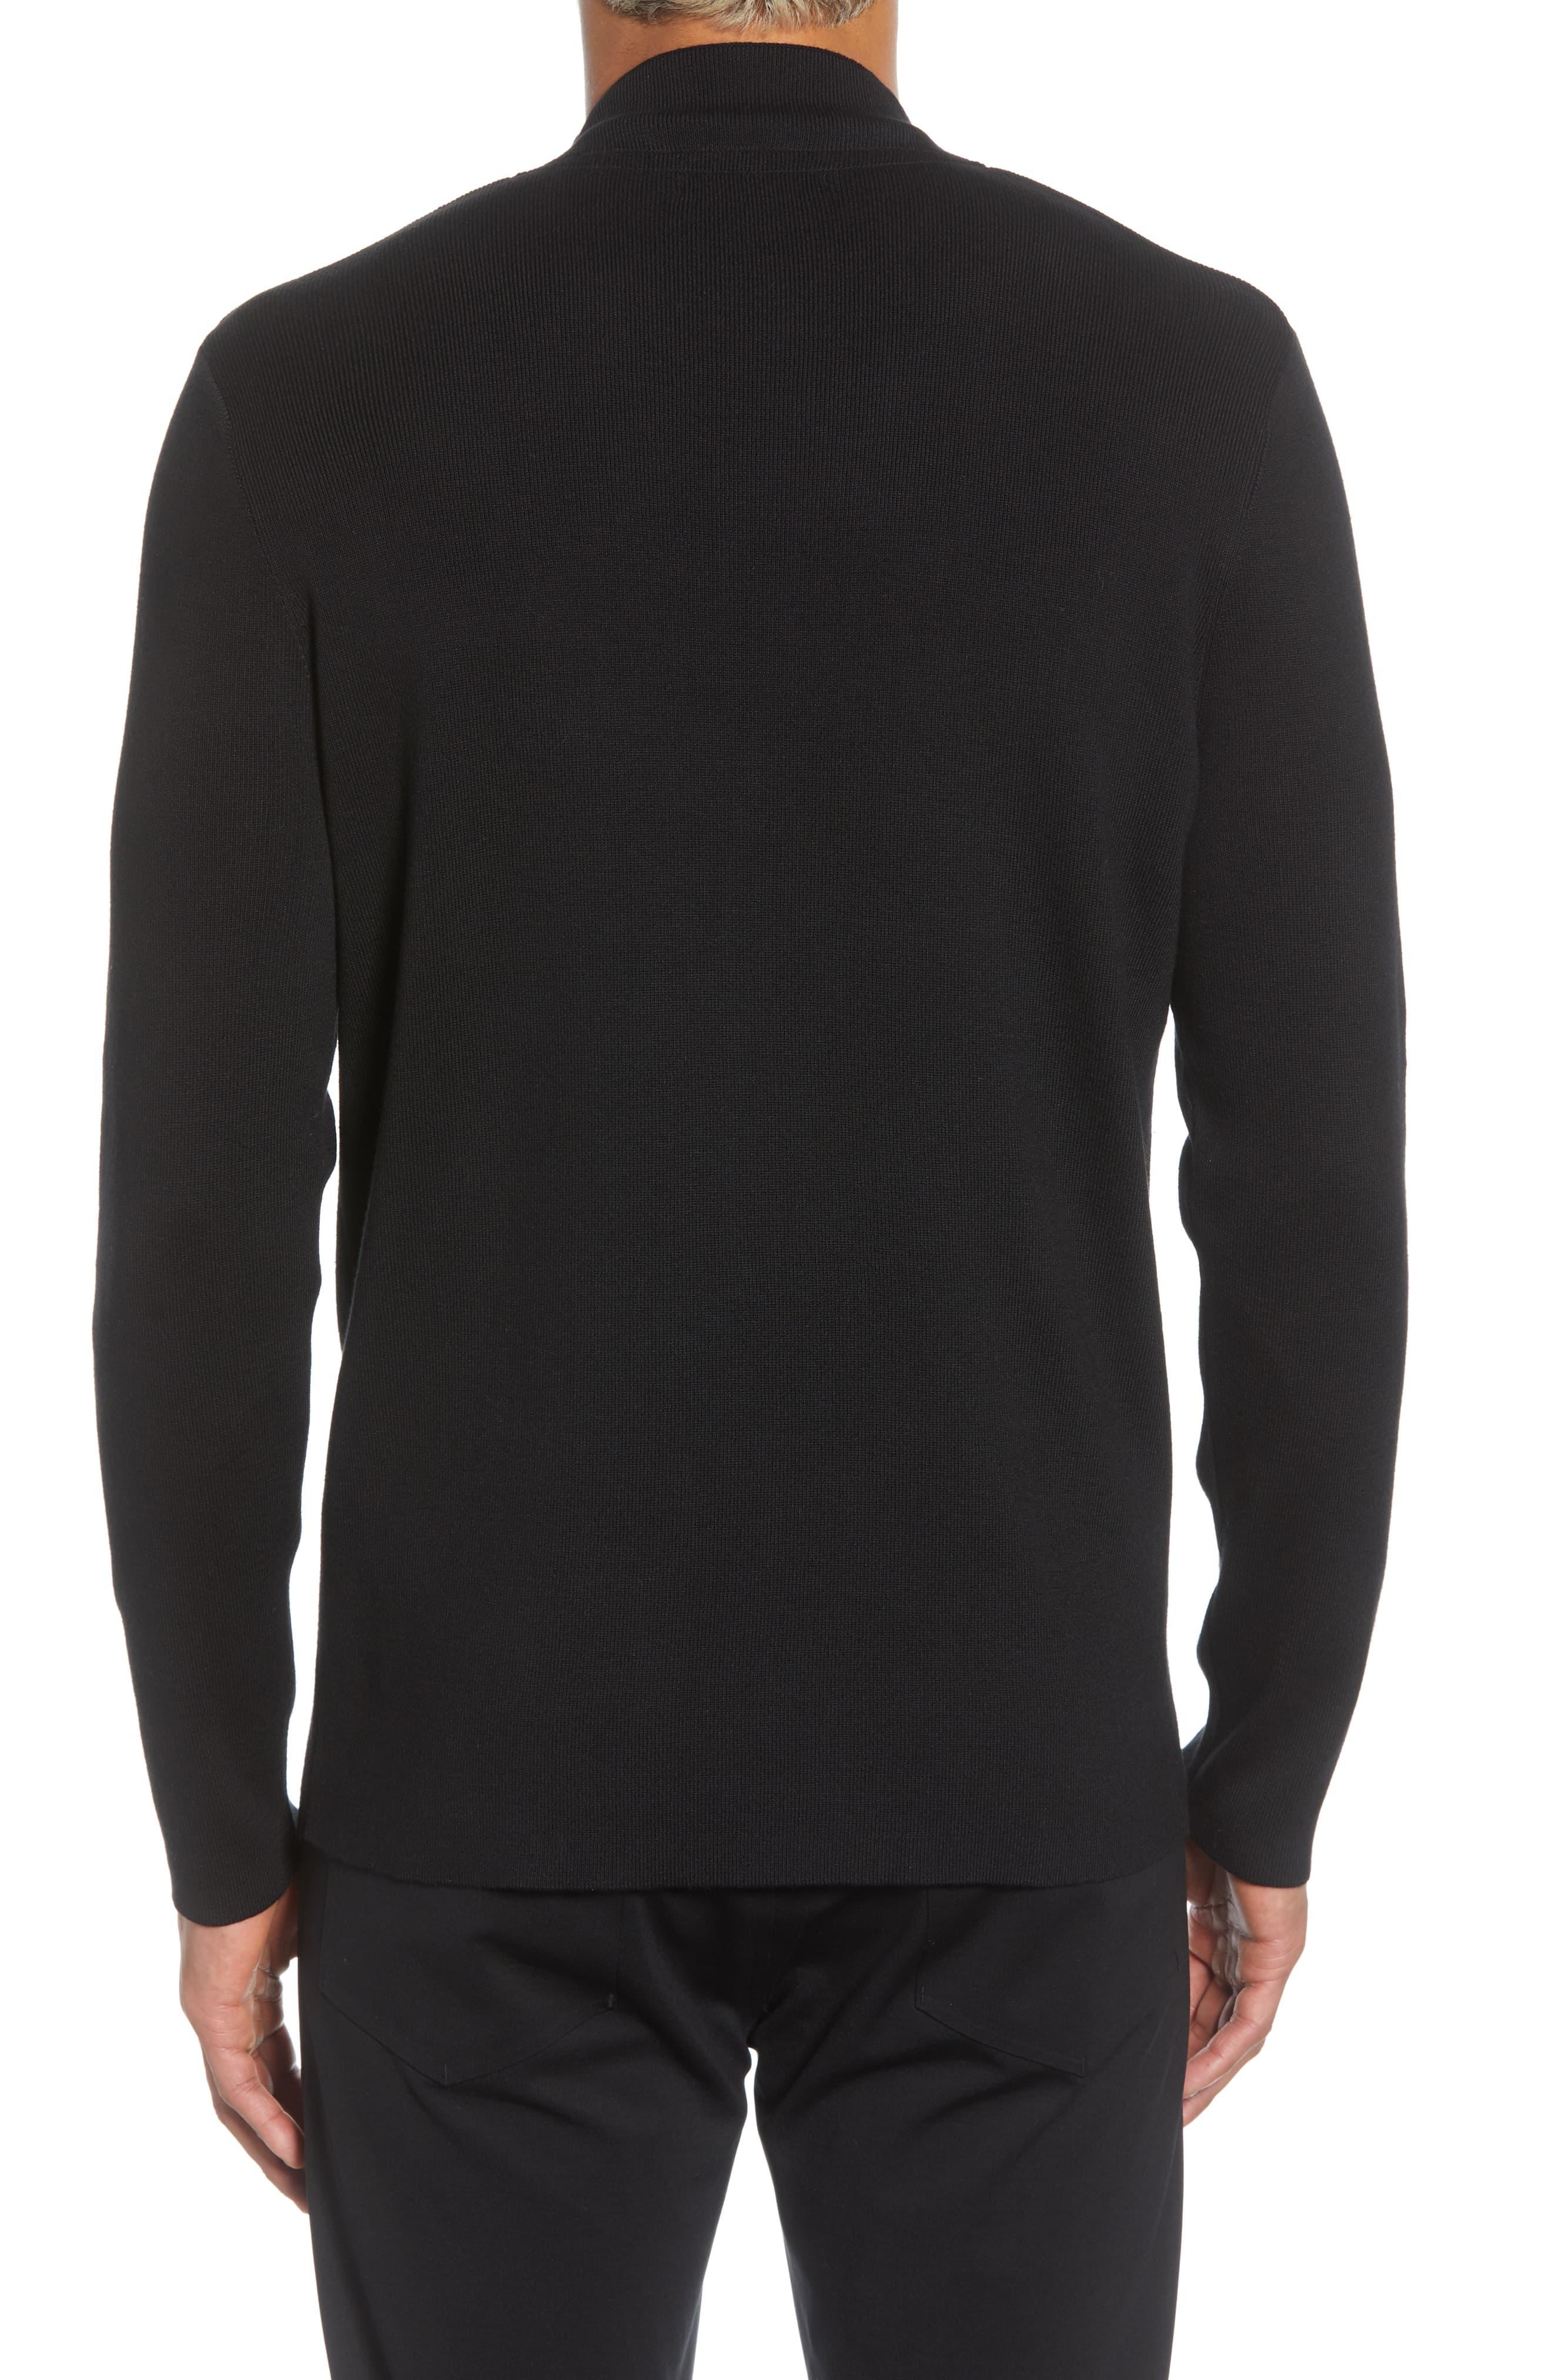 Karl Lagerfeld Shoulder Zip Cotton Blend Sweater in Black for Men - Lyst